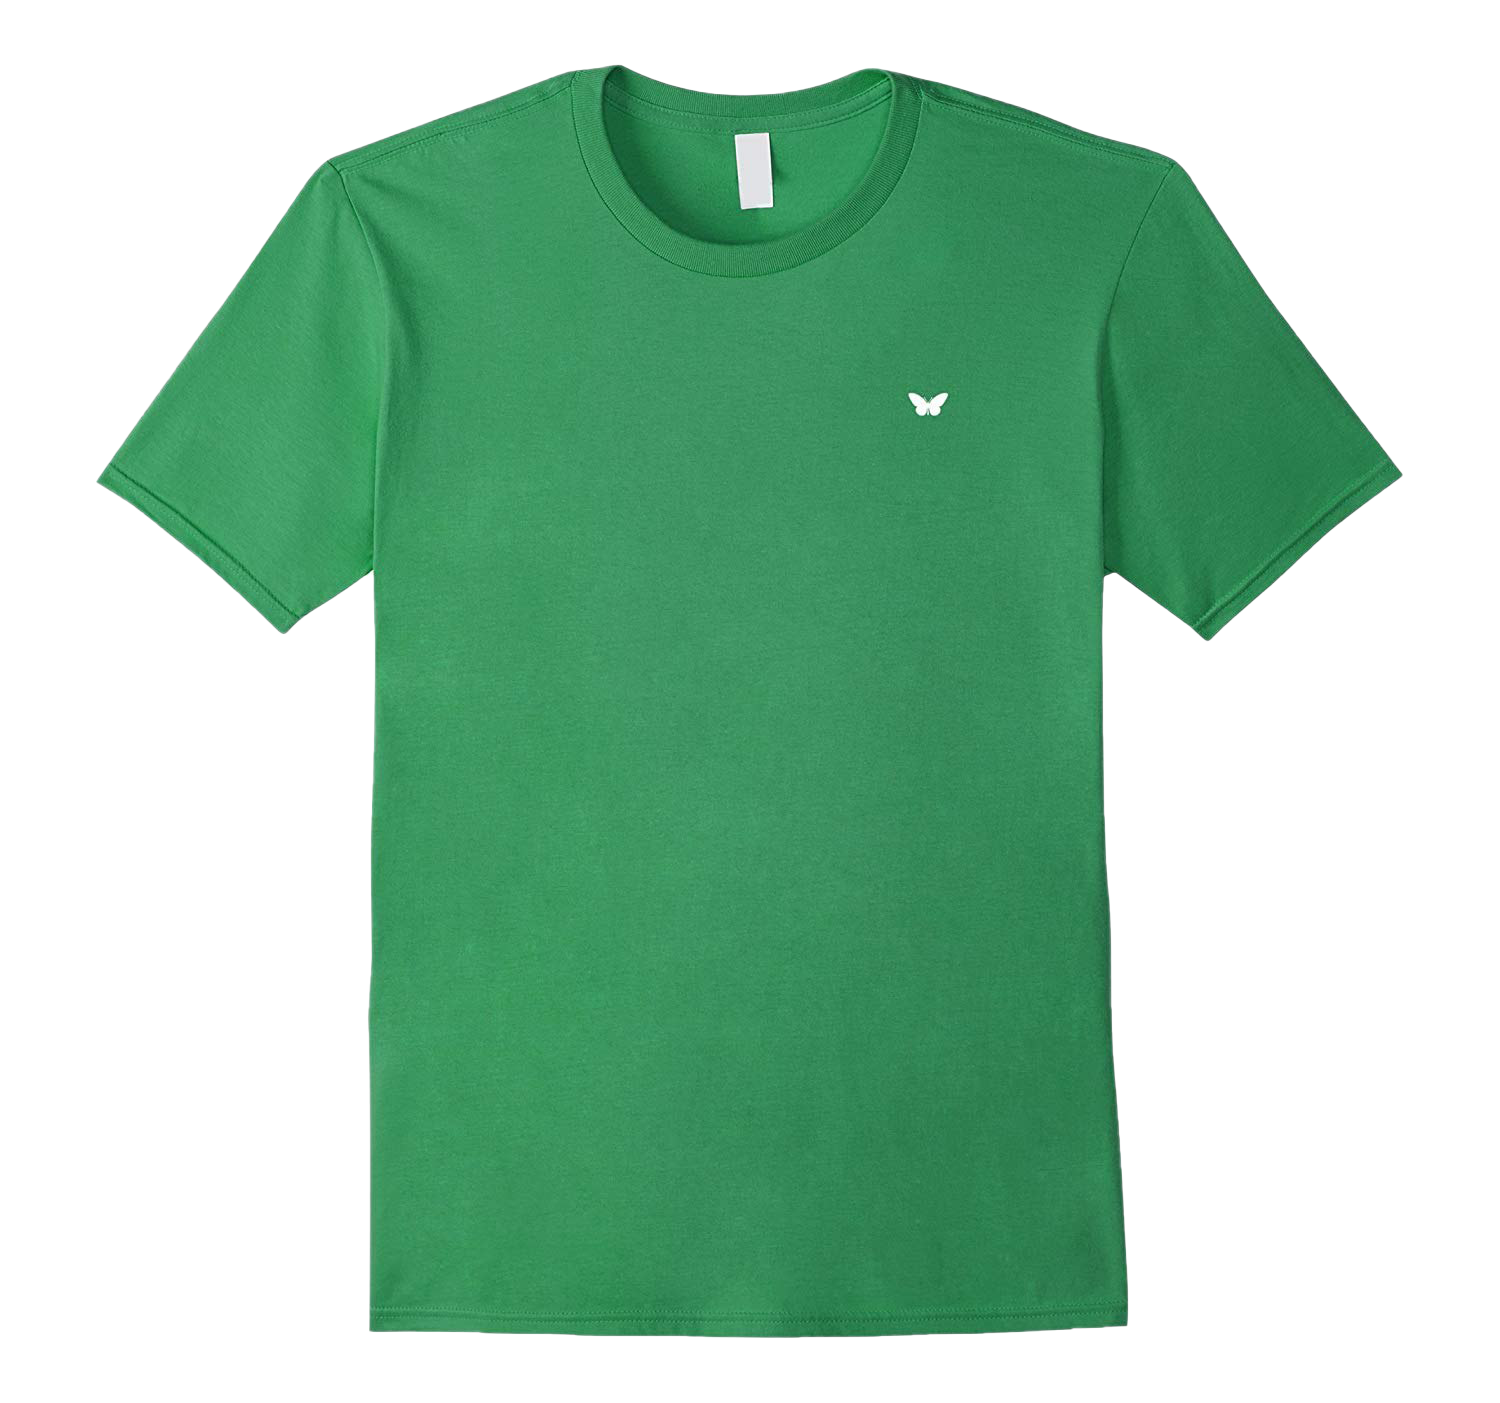 Простая зеленая футболка PNG Image